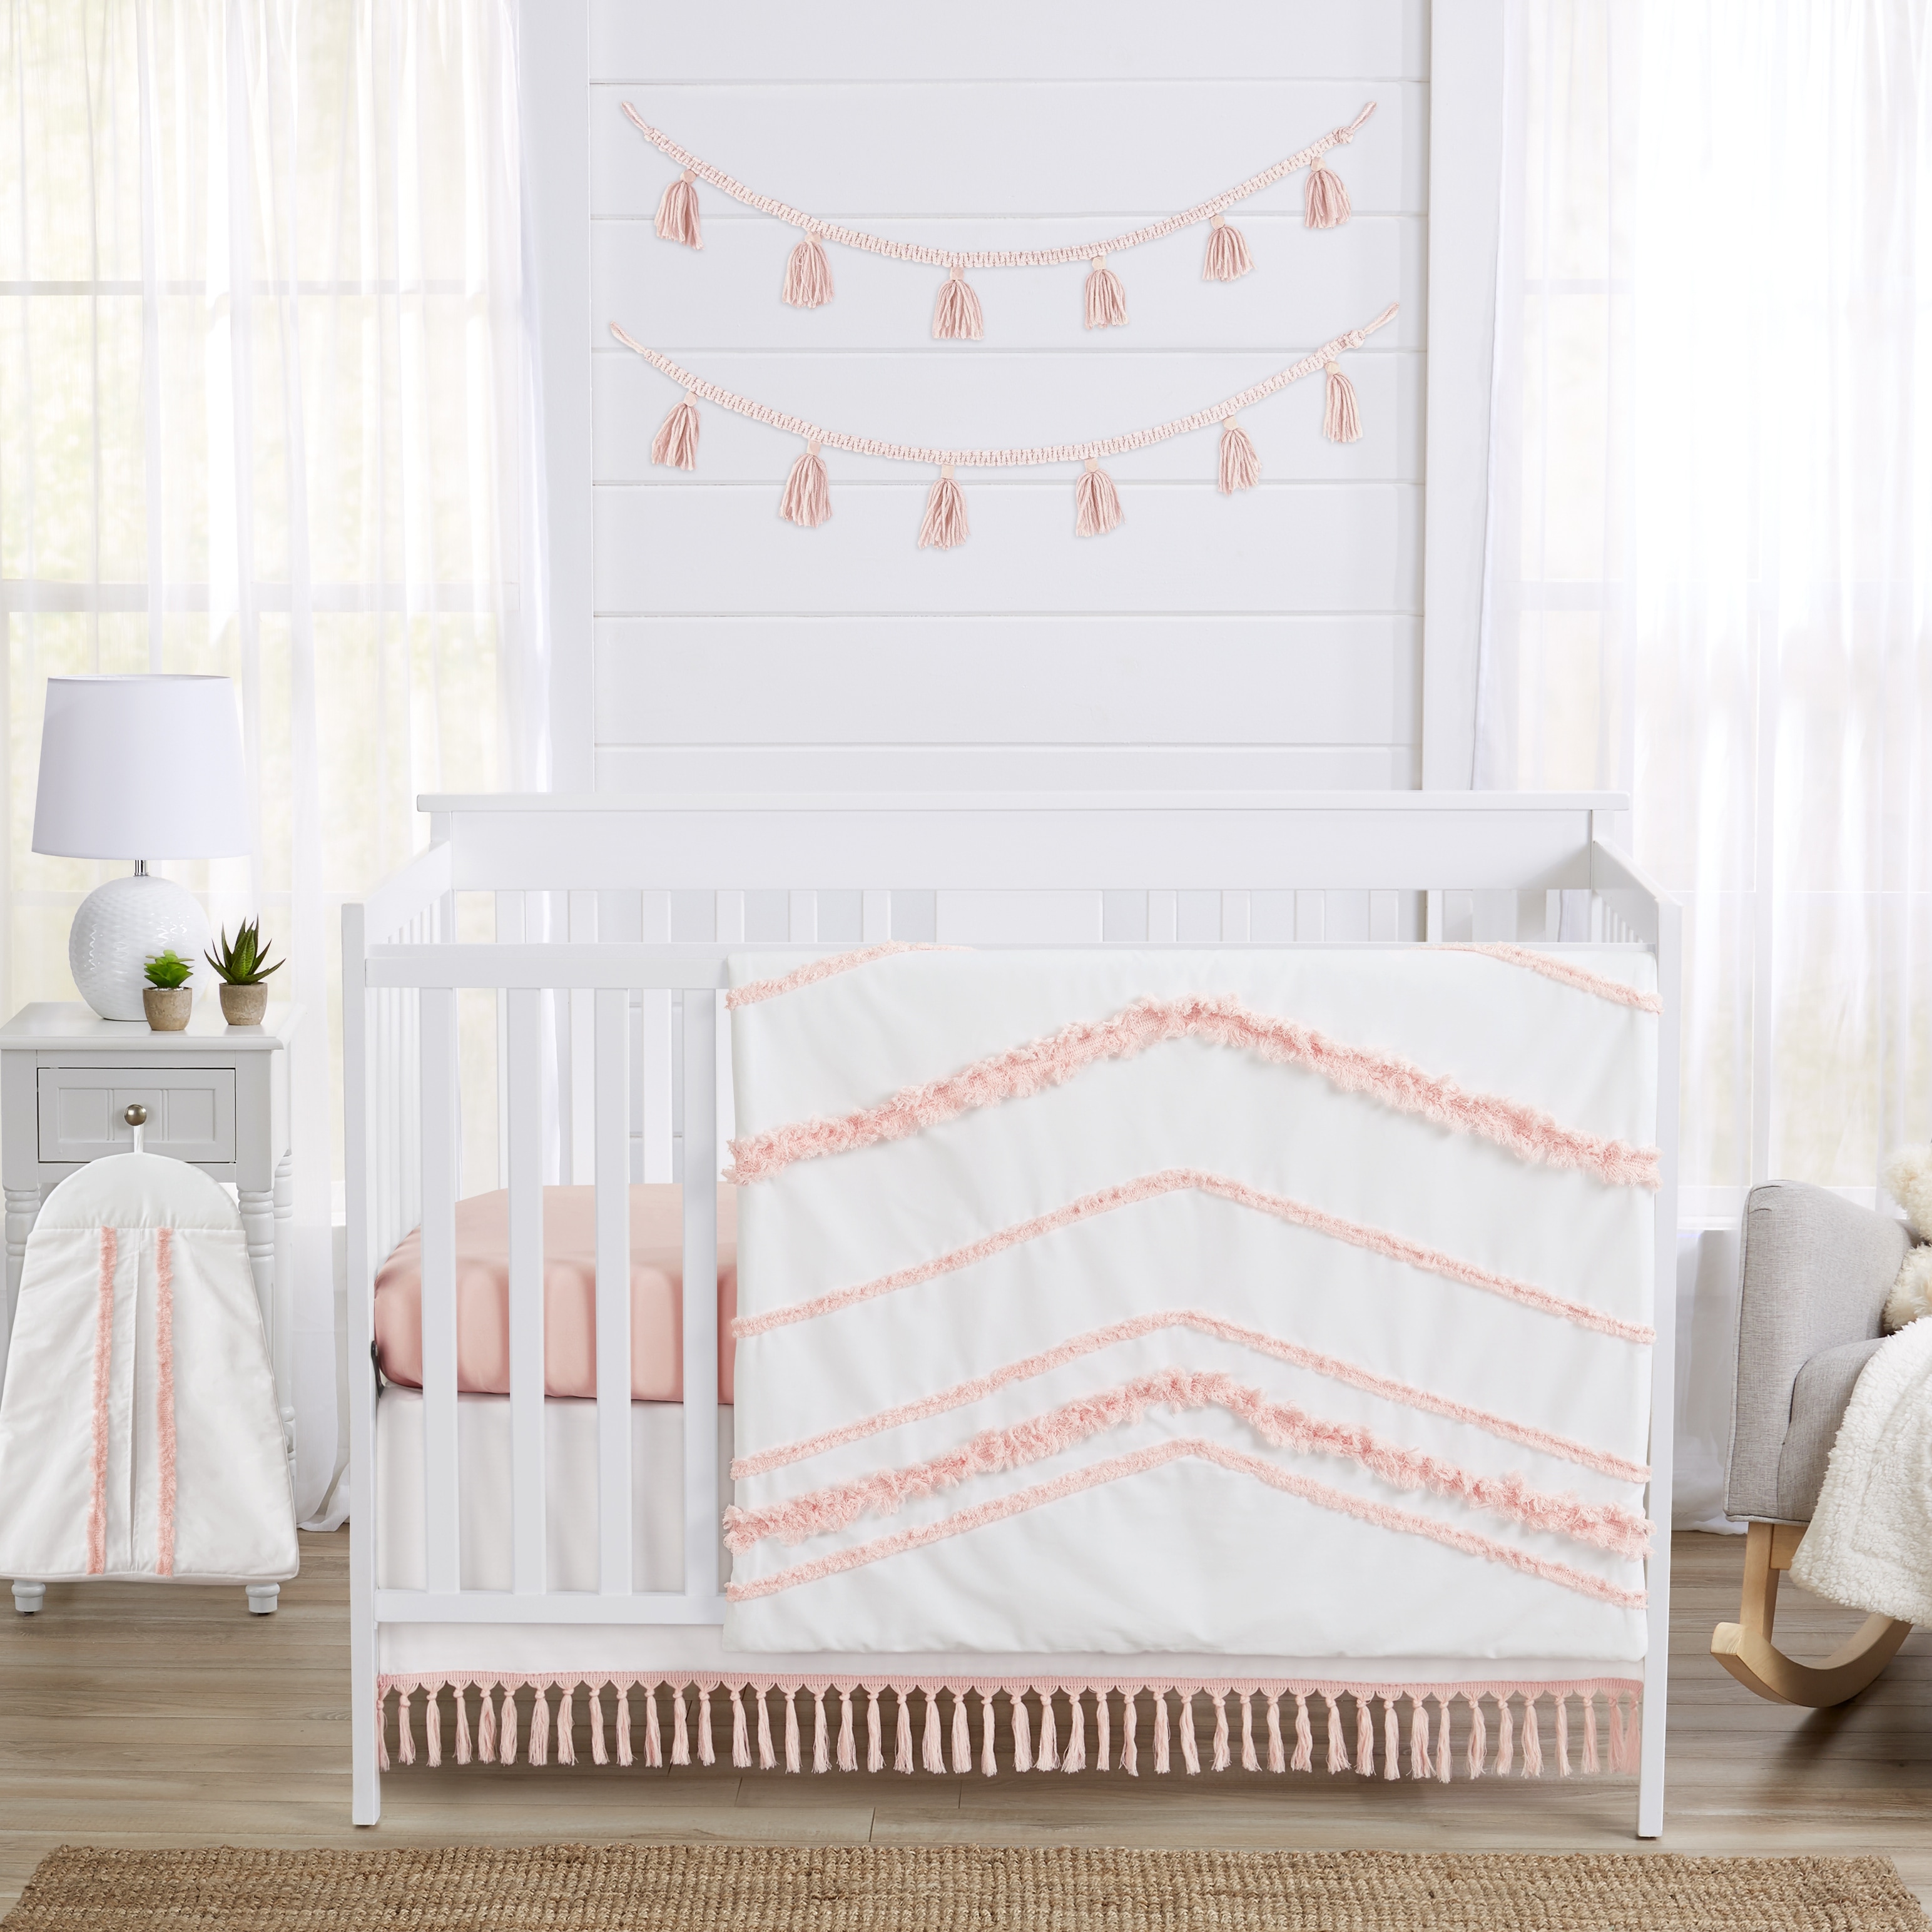 Boho Bohemian Girl 4pc Nursery Crib Bedding Set - Blush Pink and